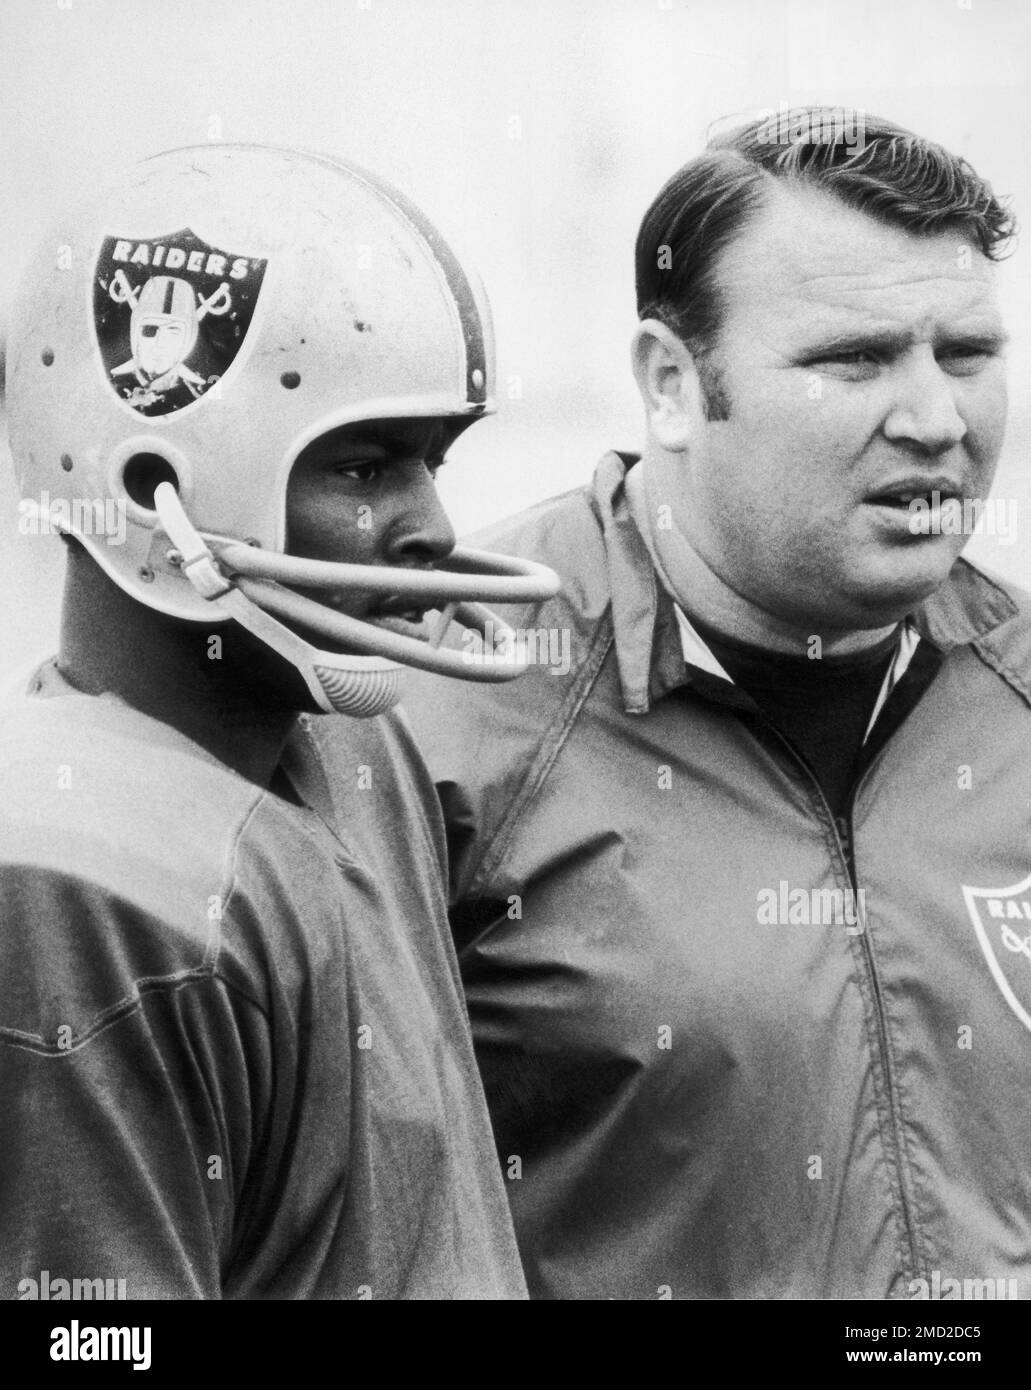 Oakland Raiders Eldridge Dickey is pictured with coach John Madden